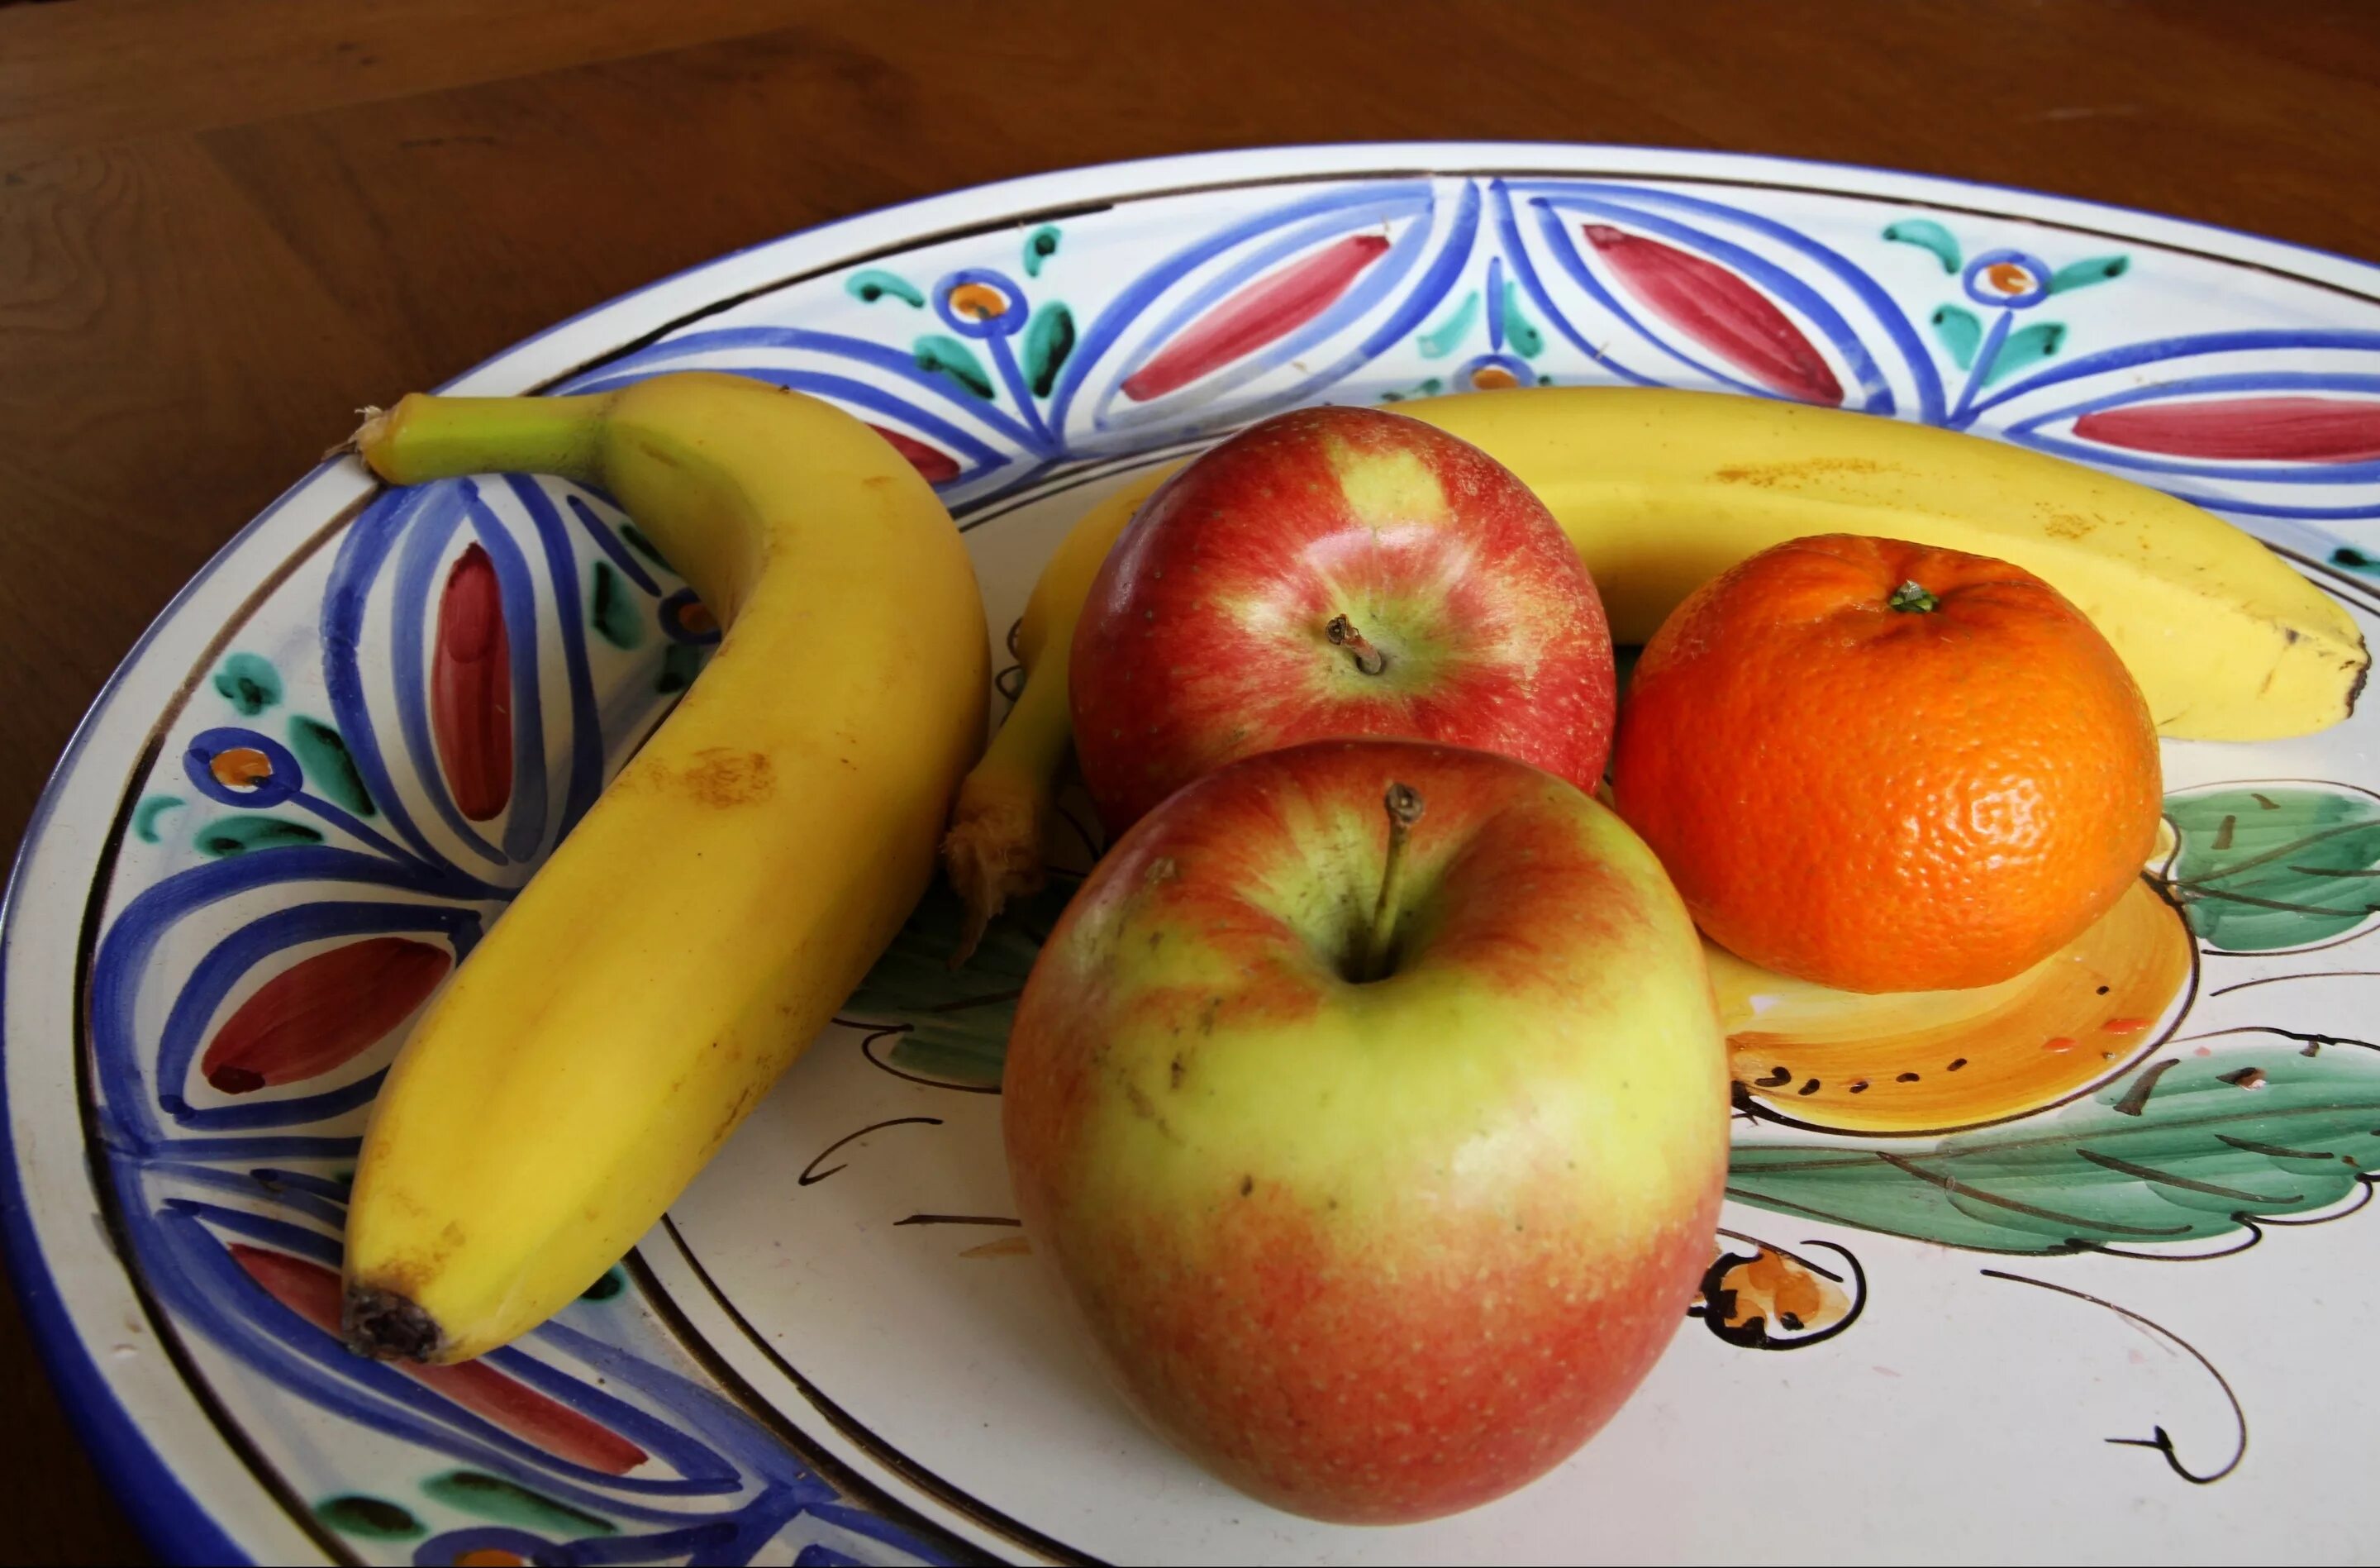 I like bananas apples. Фрукты бананы яблоки. Яблоко на тарелке. Яблоко банан апельсин. Фрукты на столе.